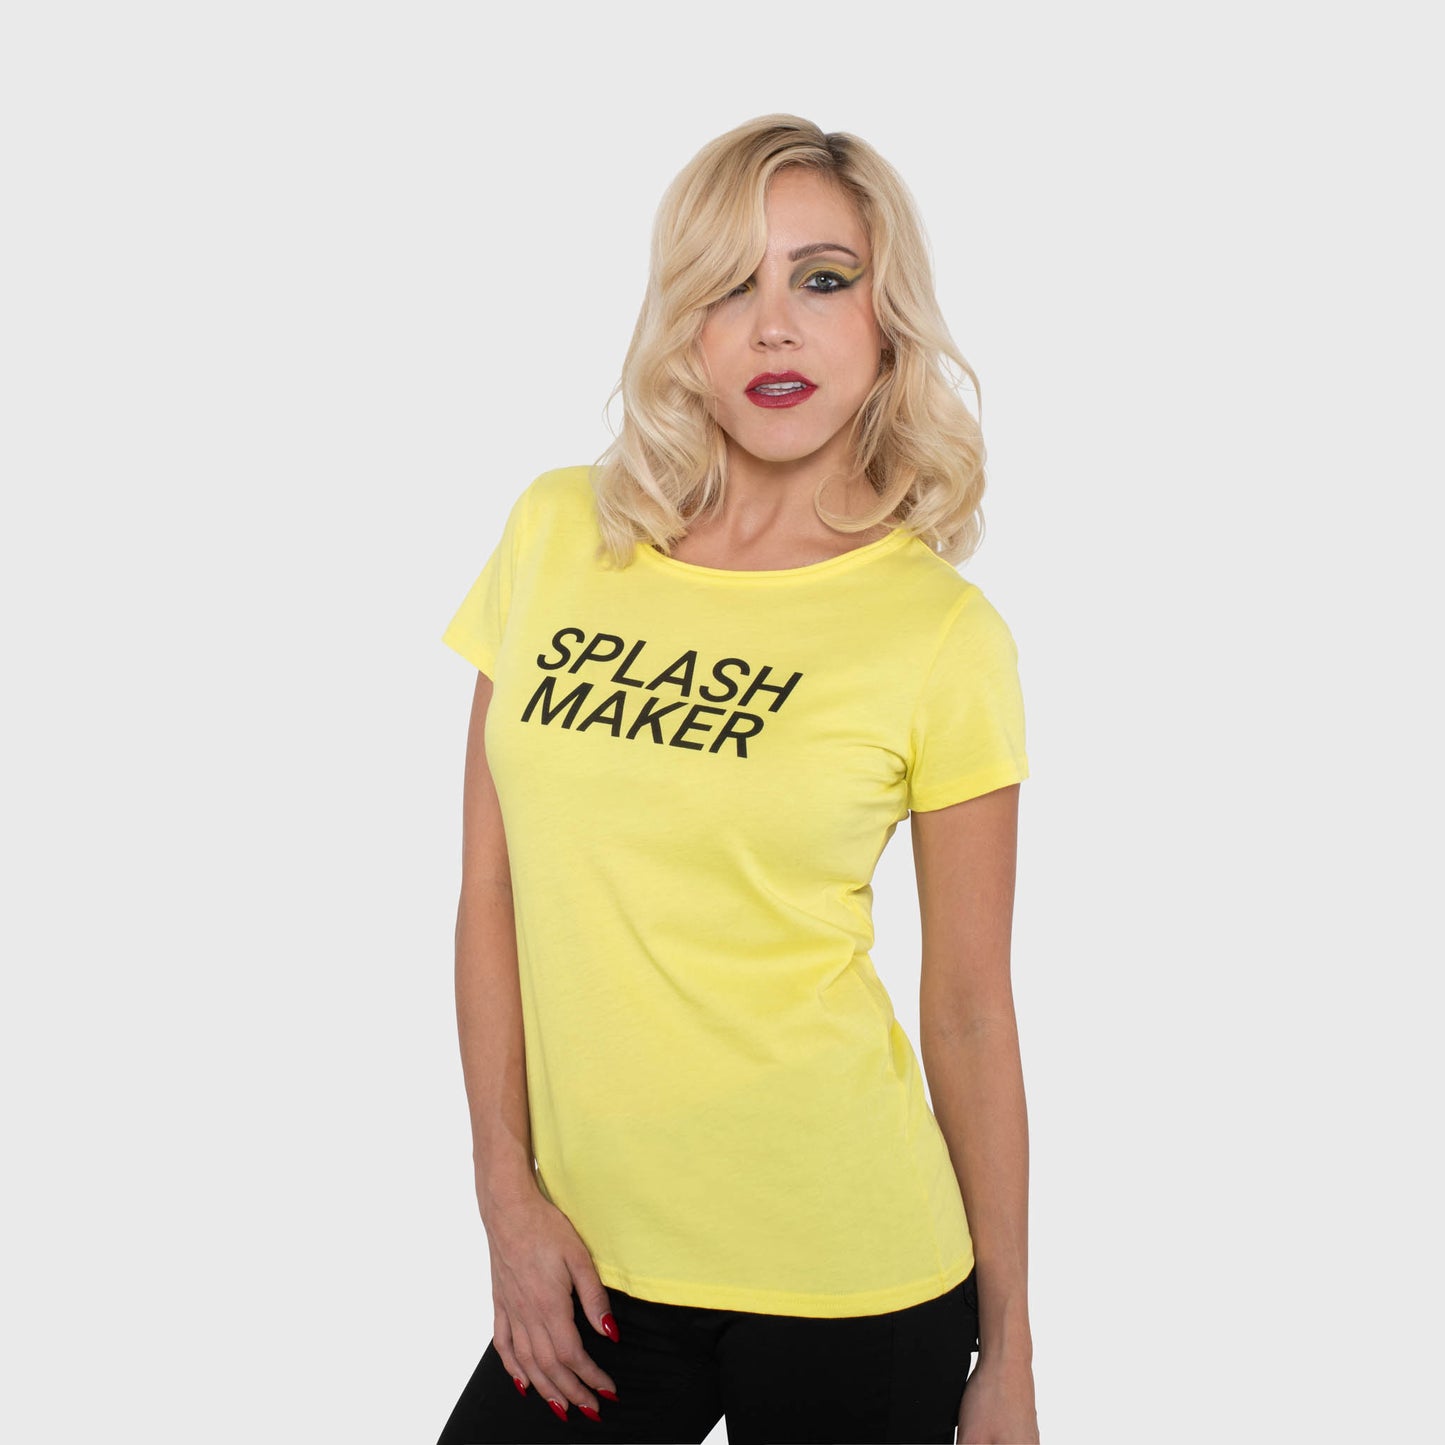 Splash Maker - Hero T-Shirt